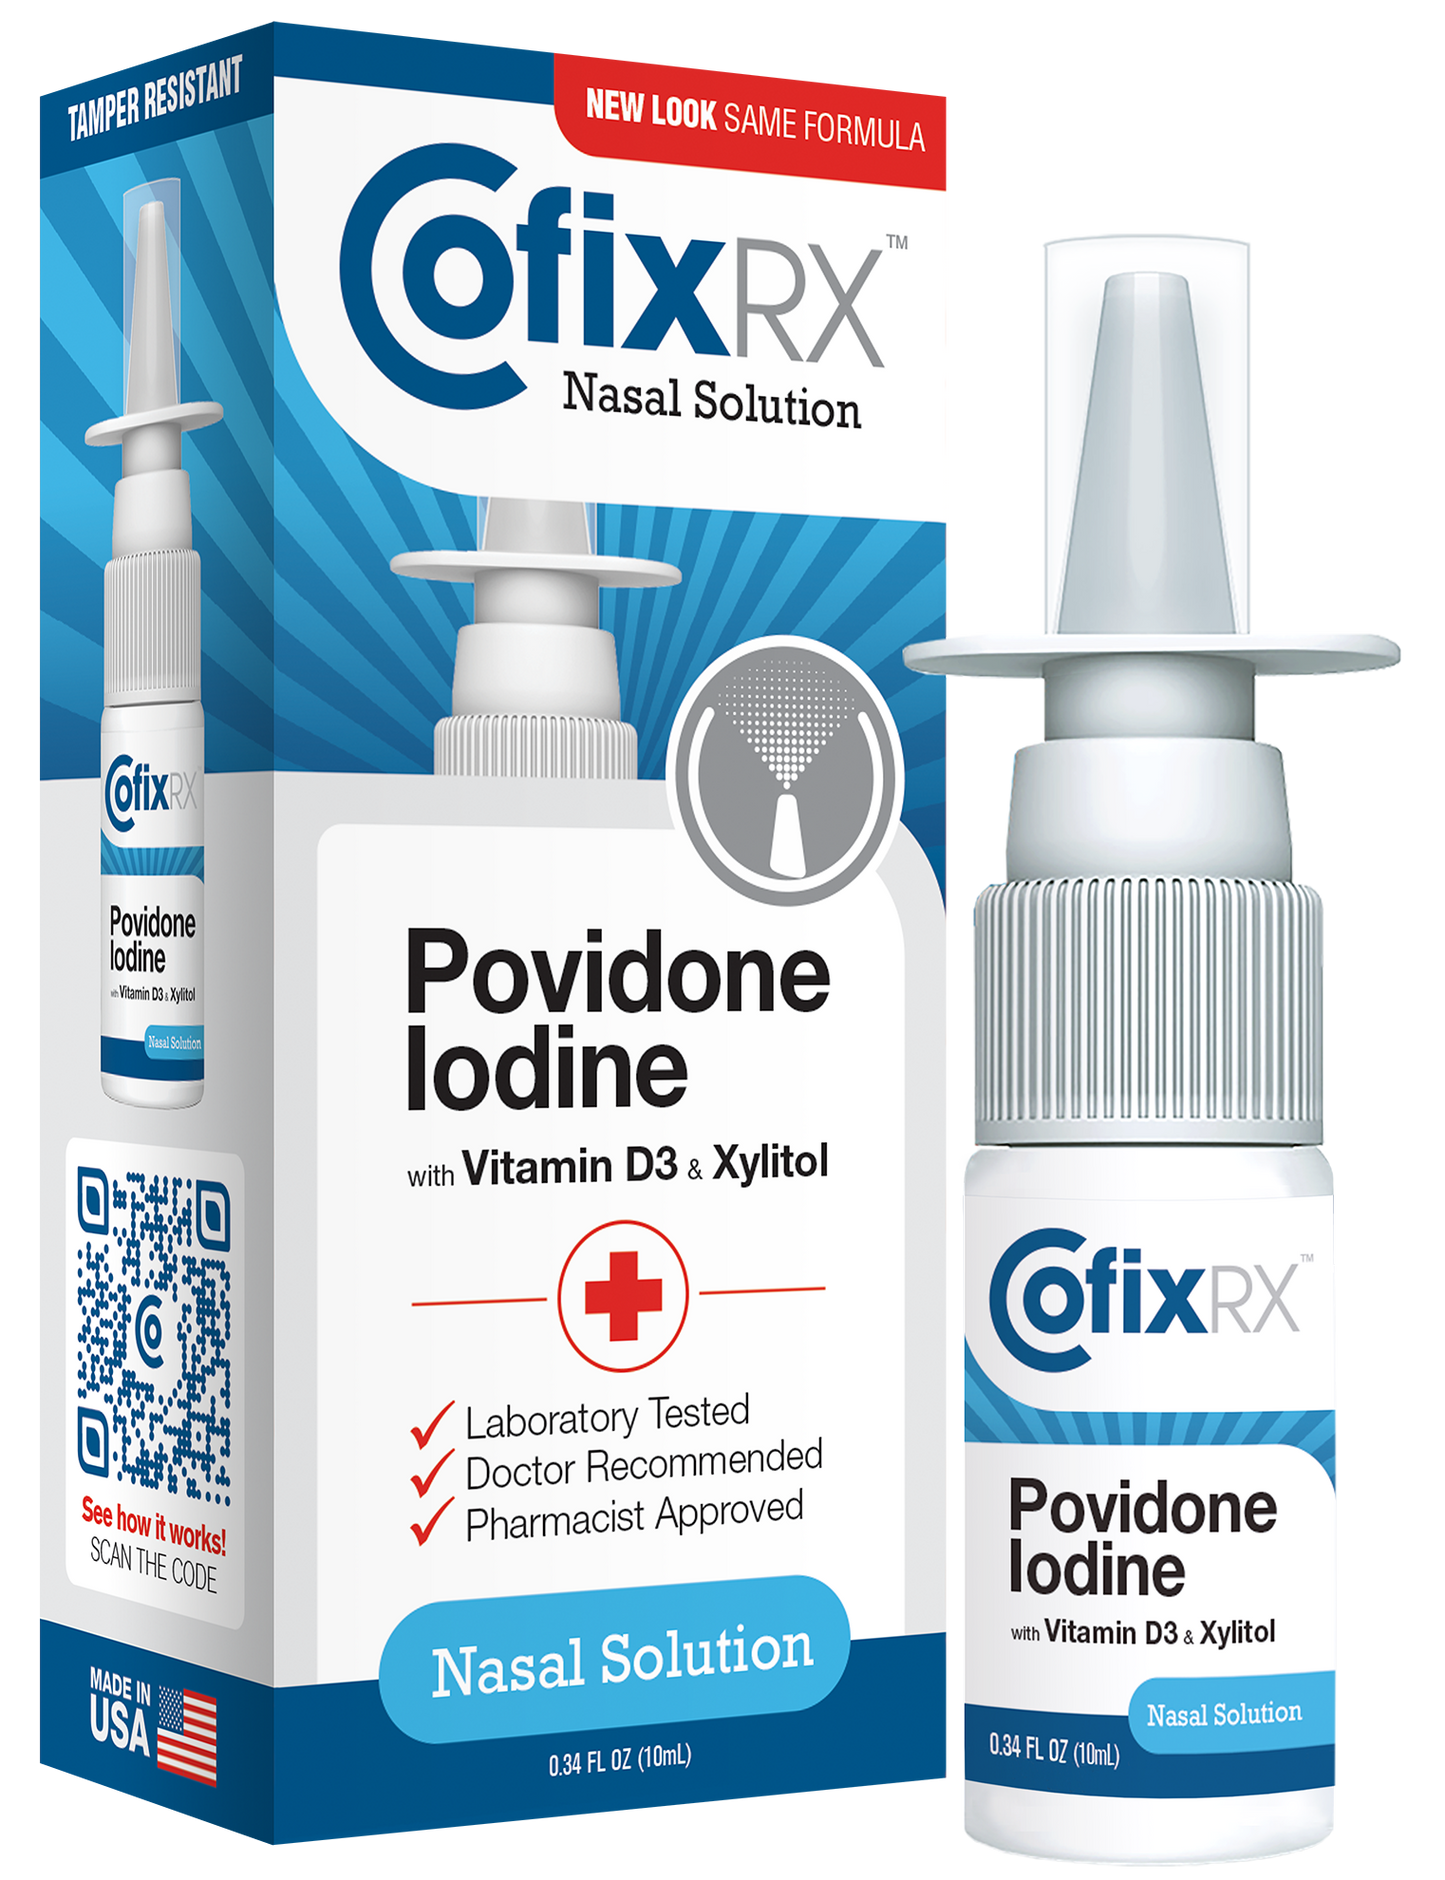 CofixRX Antiviral Nasal Solution